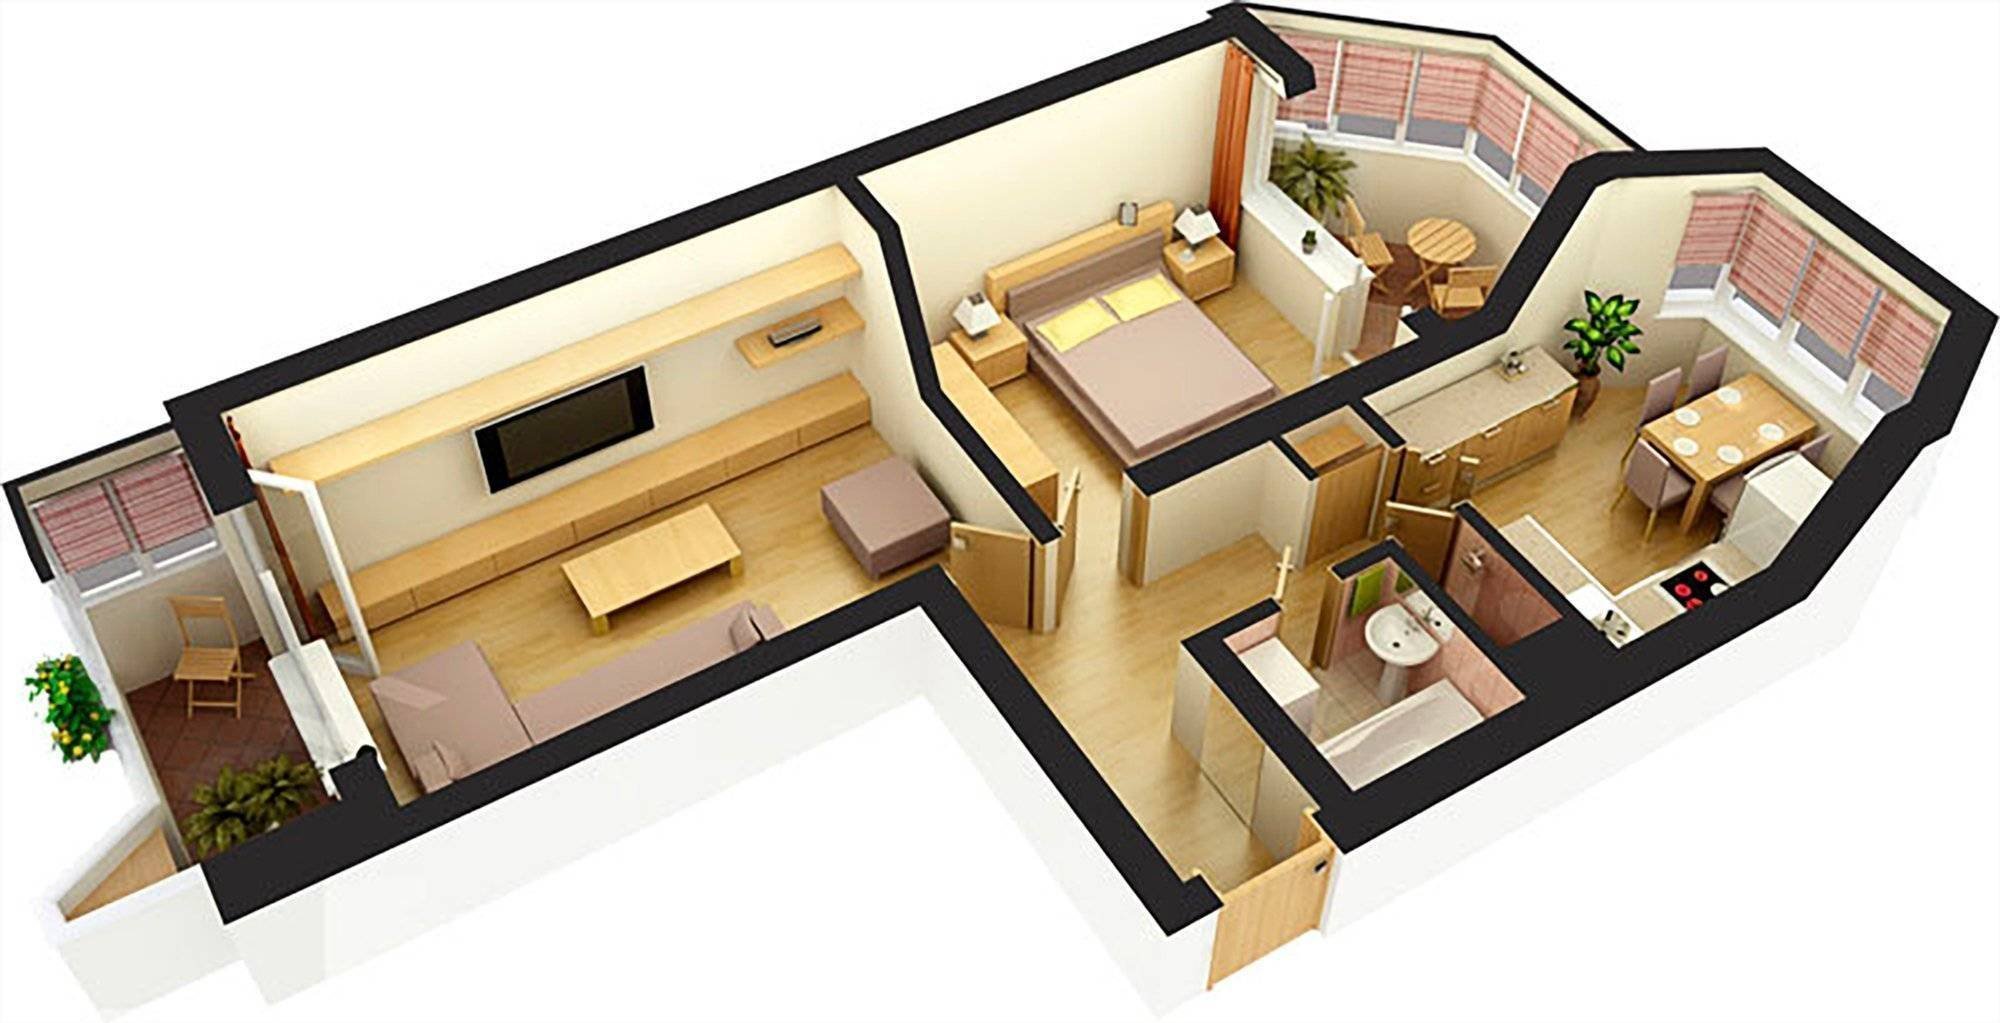 Дизайн 2 комнатной квартиры П44Т распашонки стиль лофт